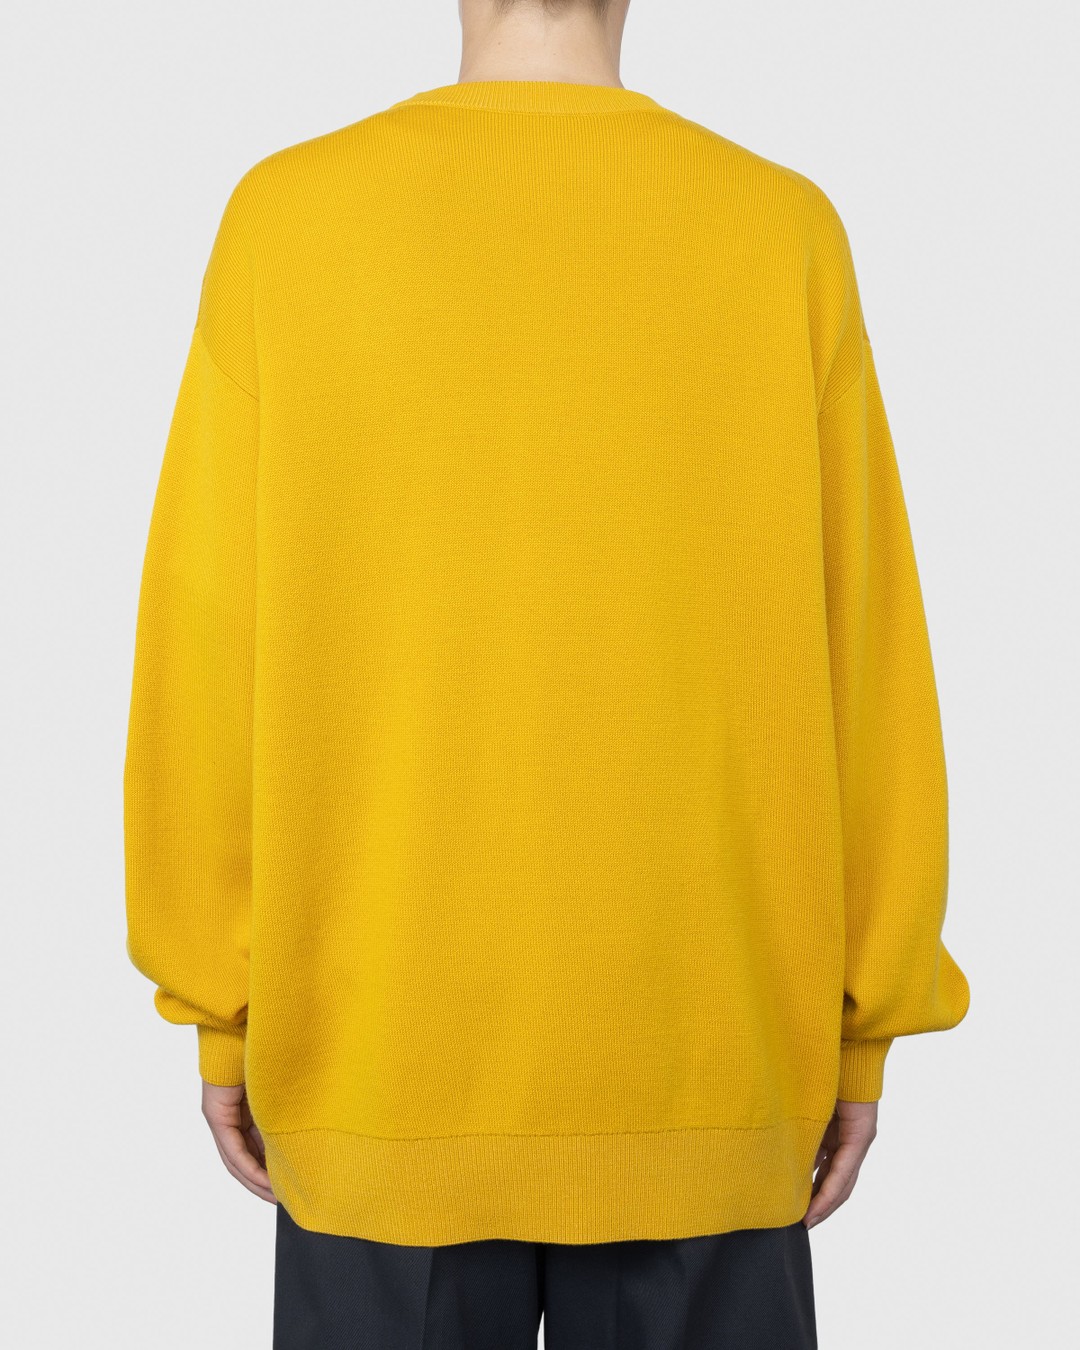 Acne Studios – Merino Wool Crewneck Sweater Yellow - Knitwear - Yellow - Image 4